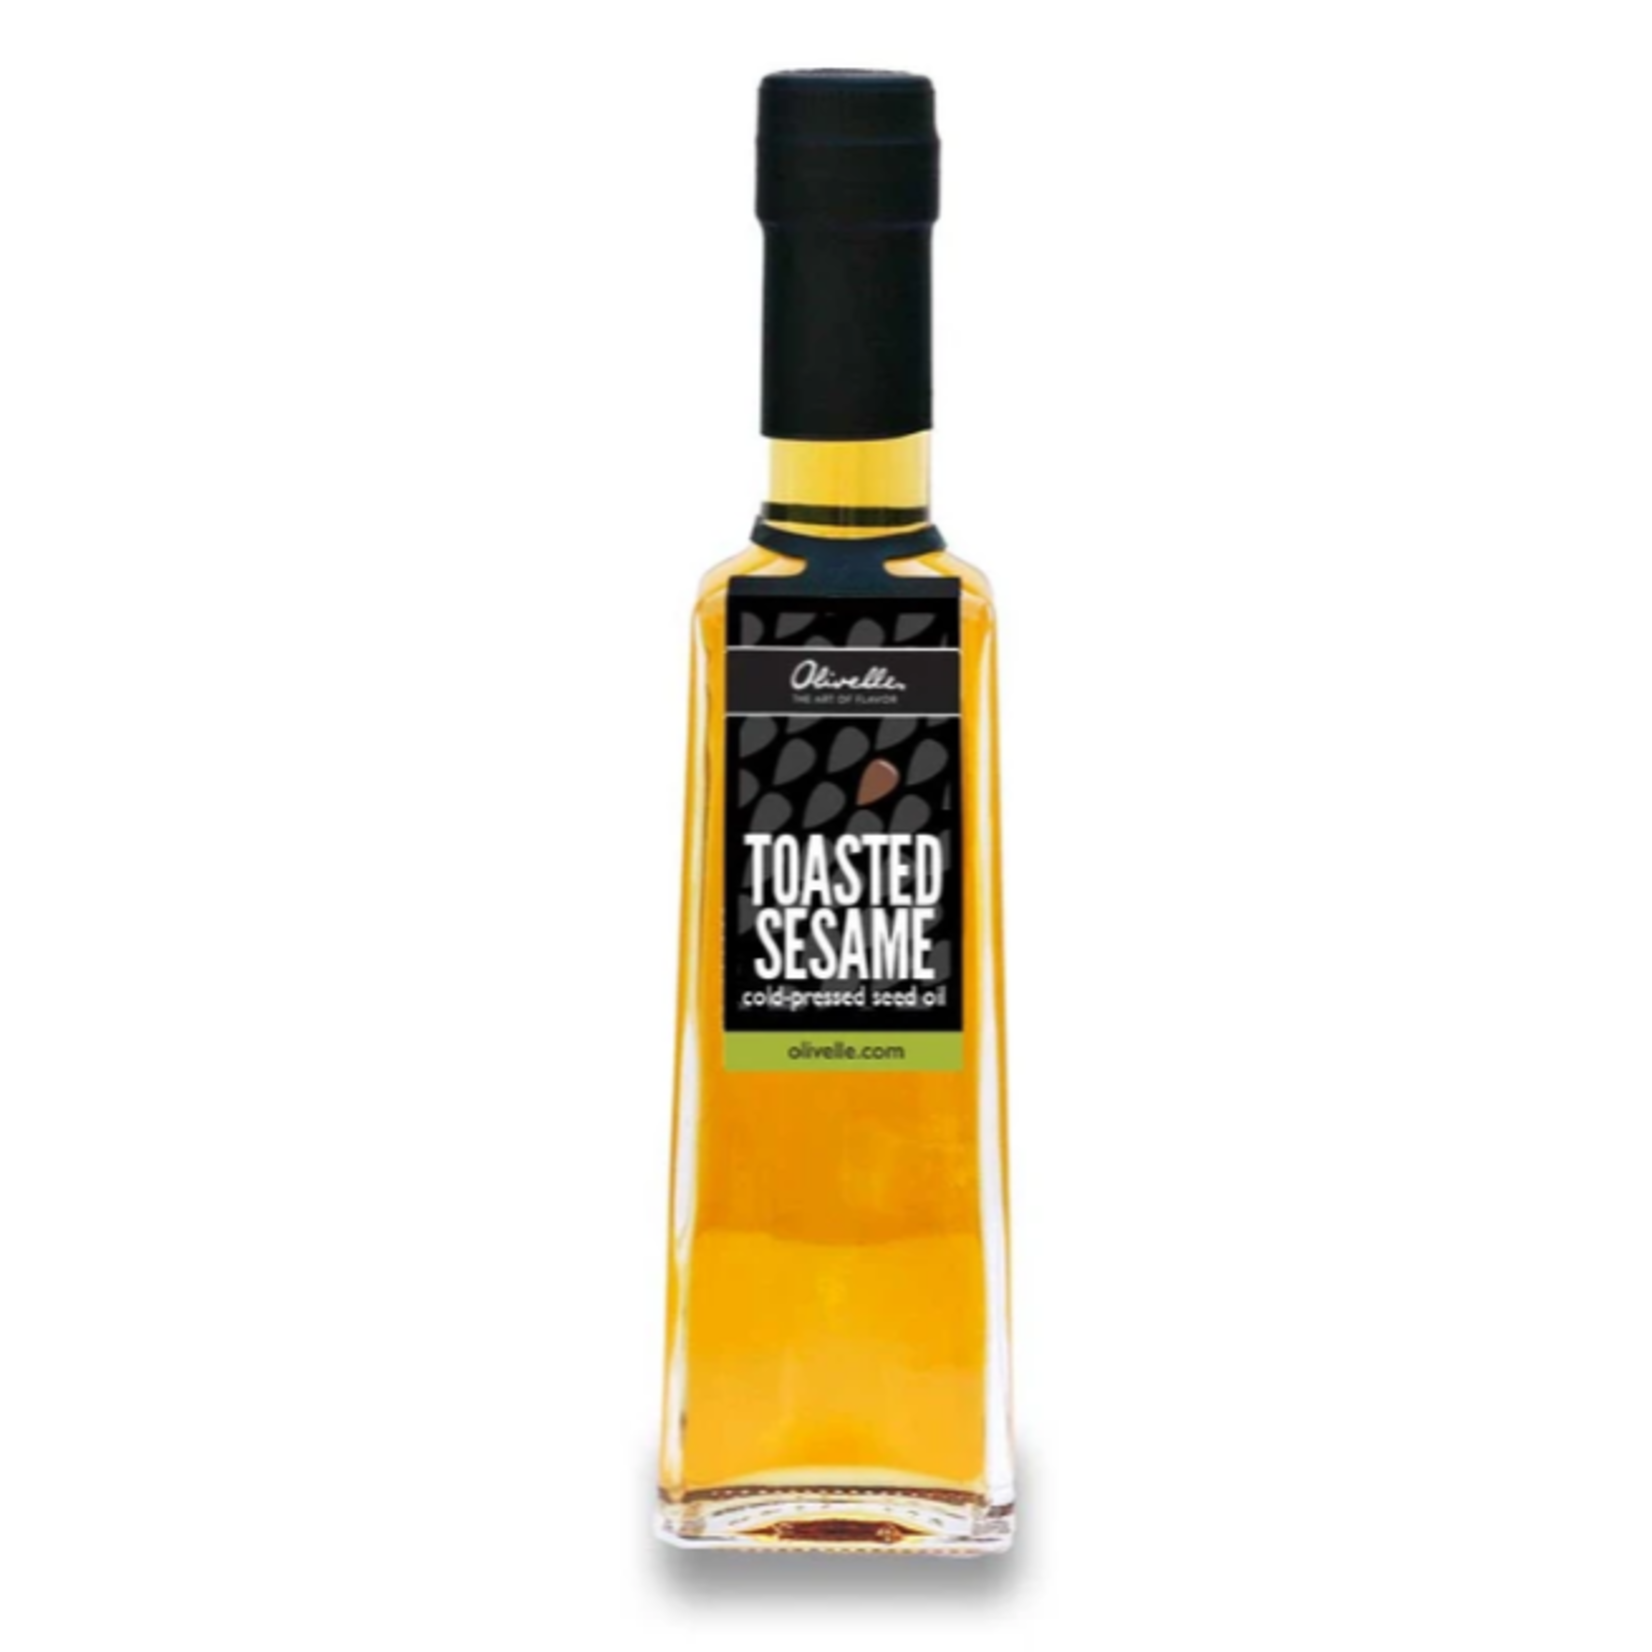 Olivelle Toasted Sesame Oil